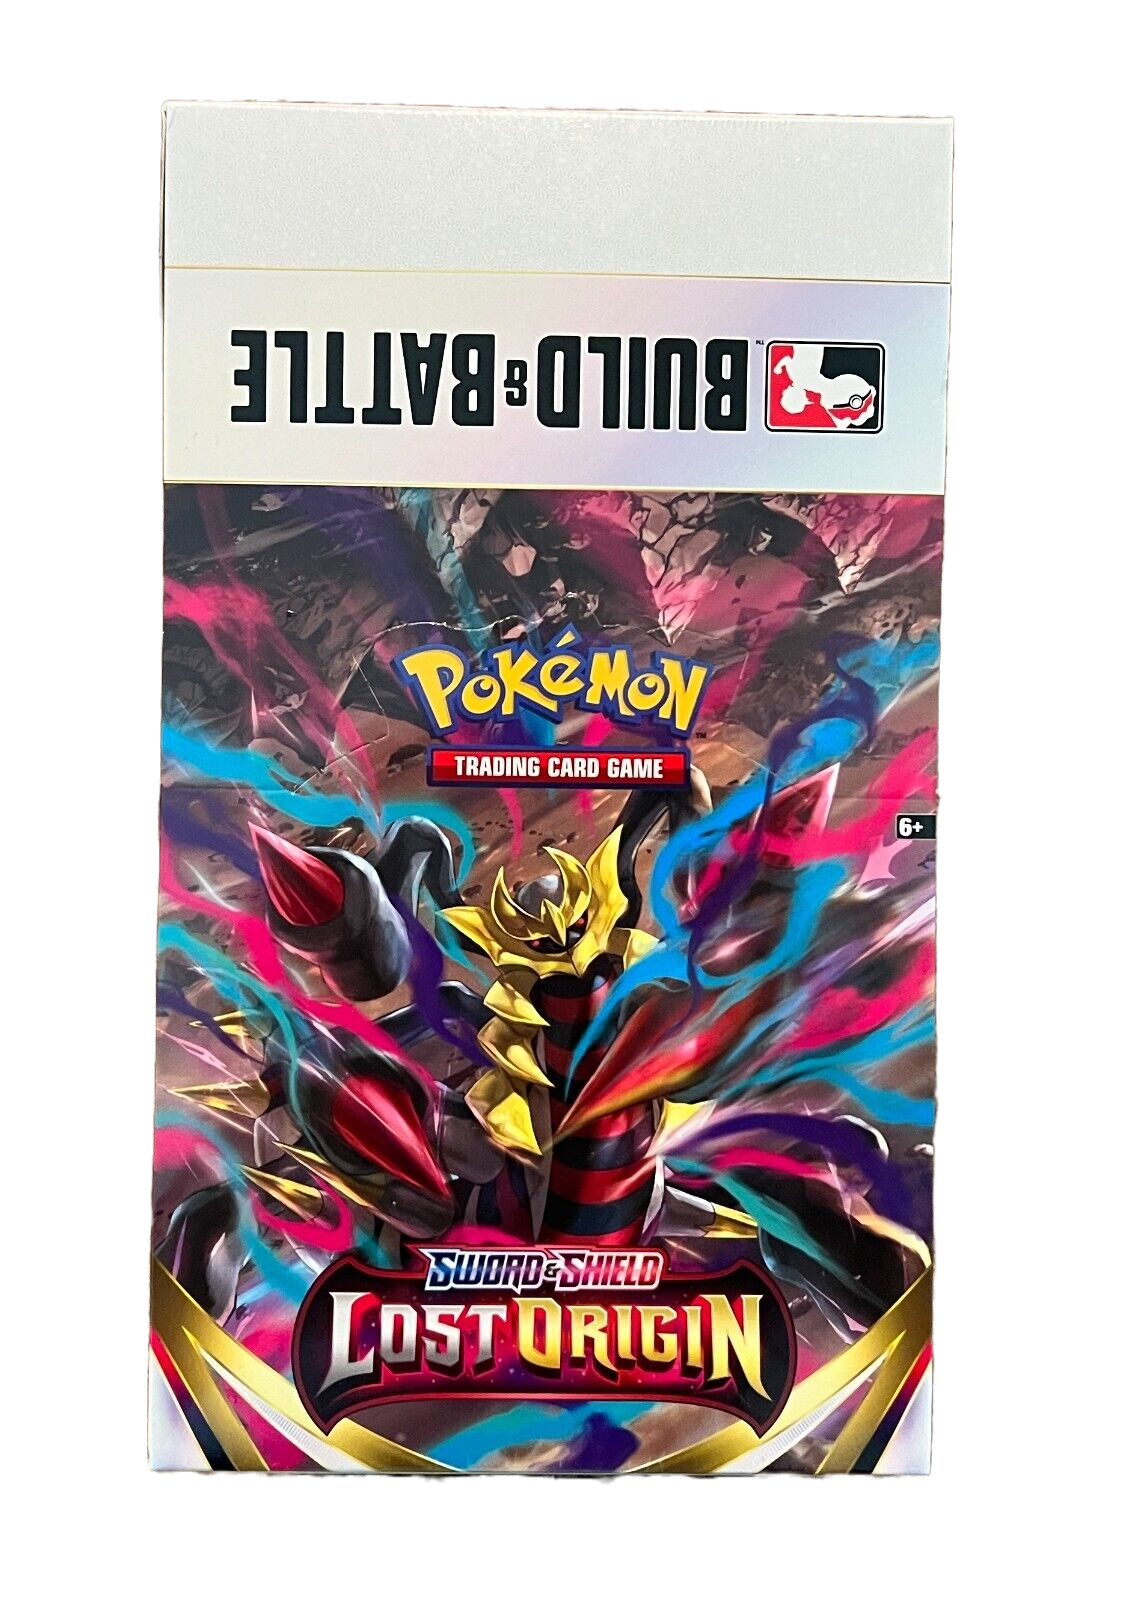 Pokémon Sword & Shield: Lost Origin Build & Battle Box